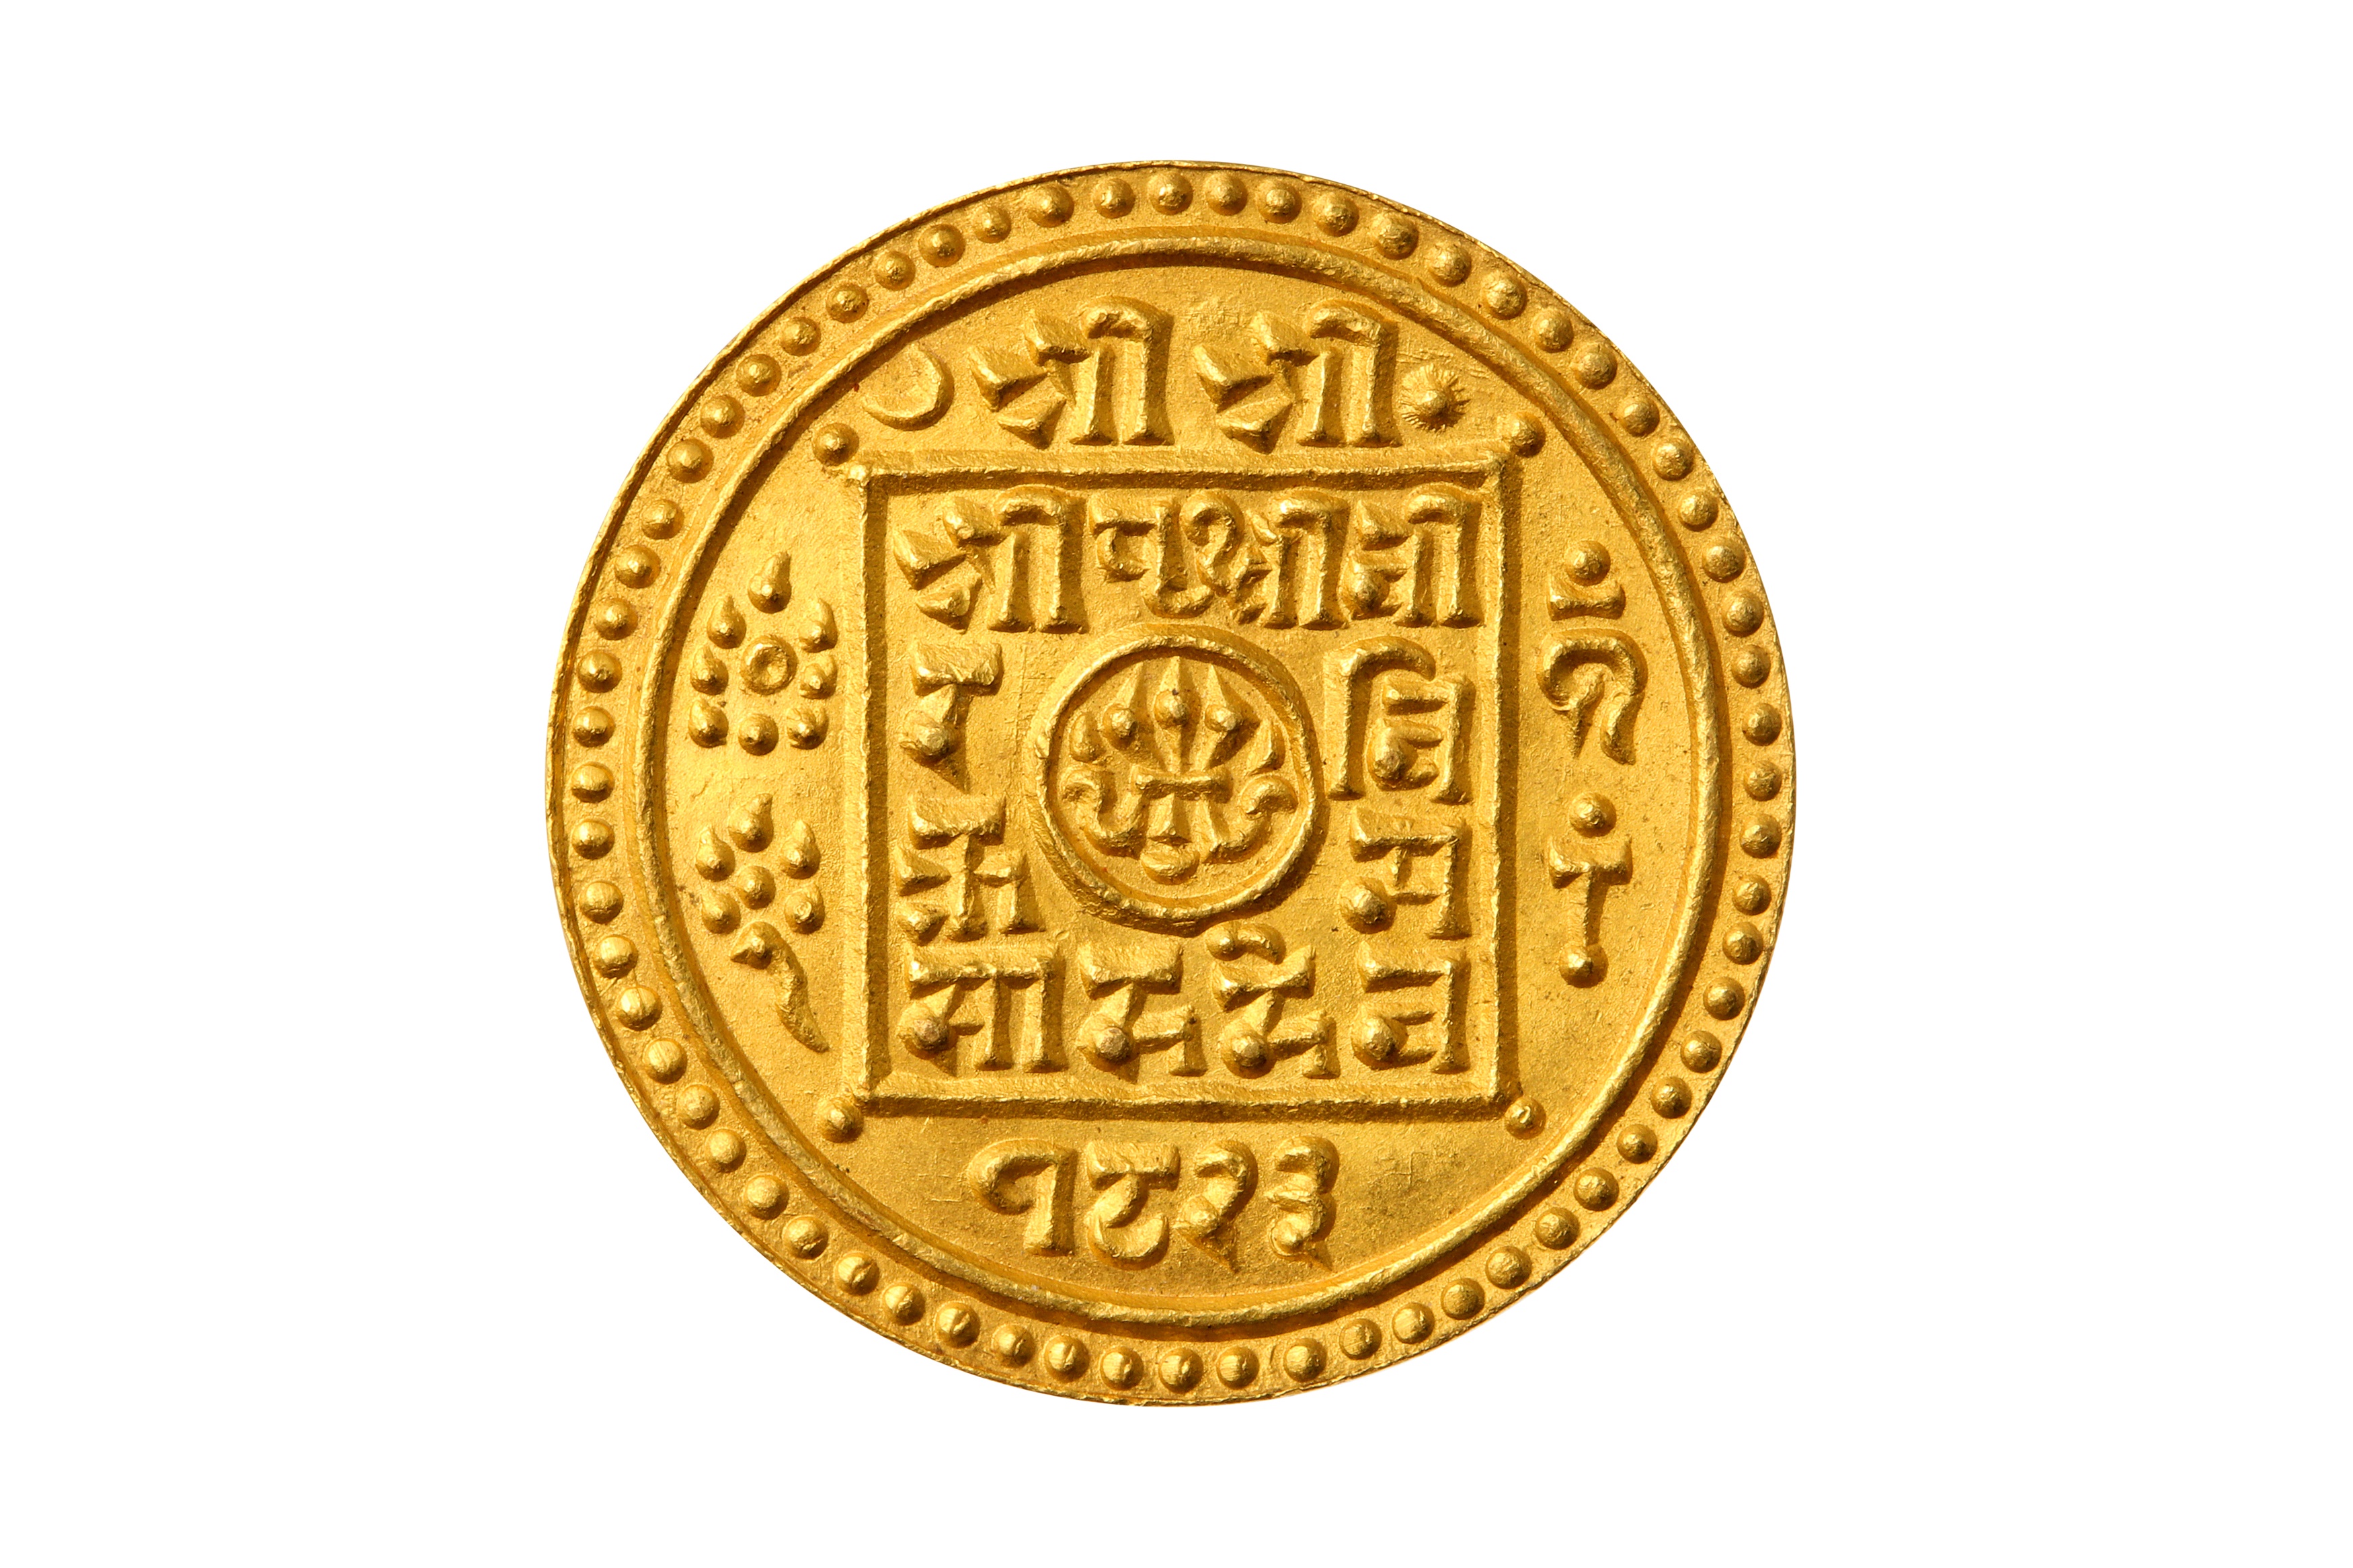 NEPAL, SHAH DYNASTY, PRITHVI BIR BIKRAM (1881 - 1911) SE 1823 (1901) GOLD TOLA. - Image 2 of 2